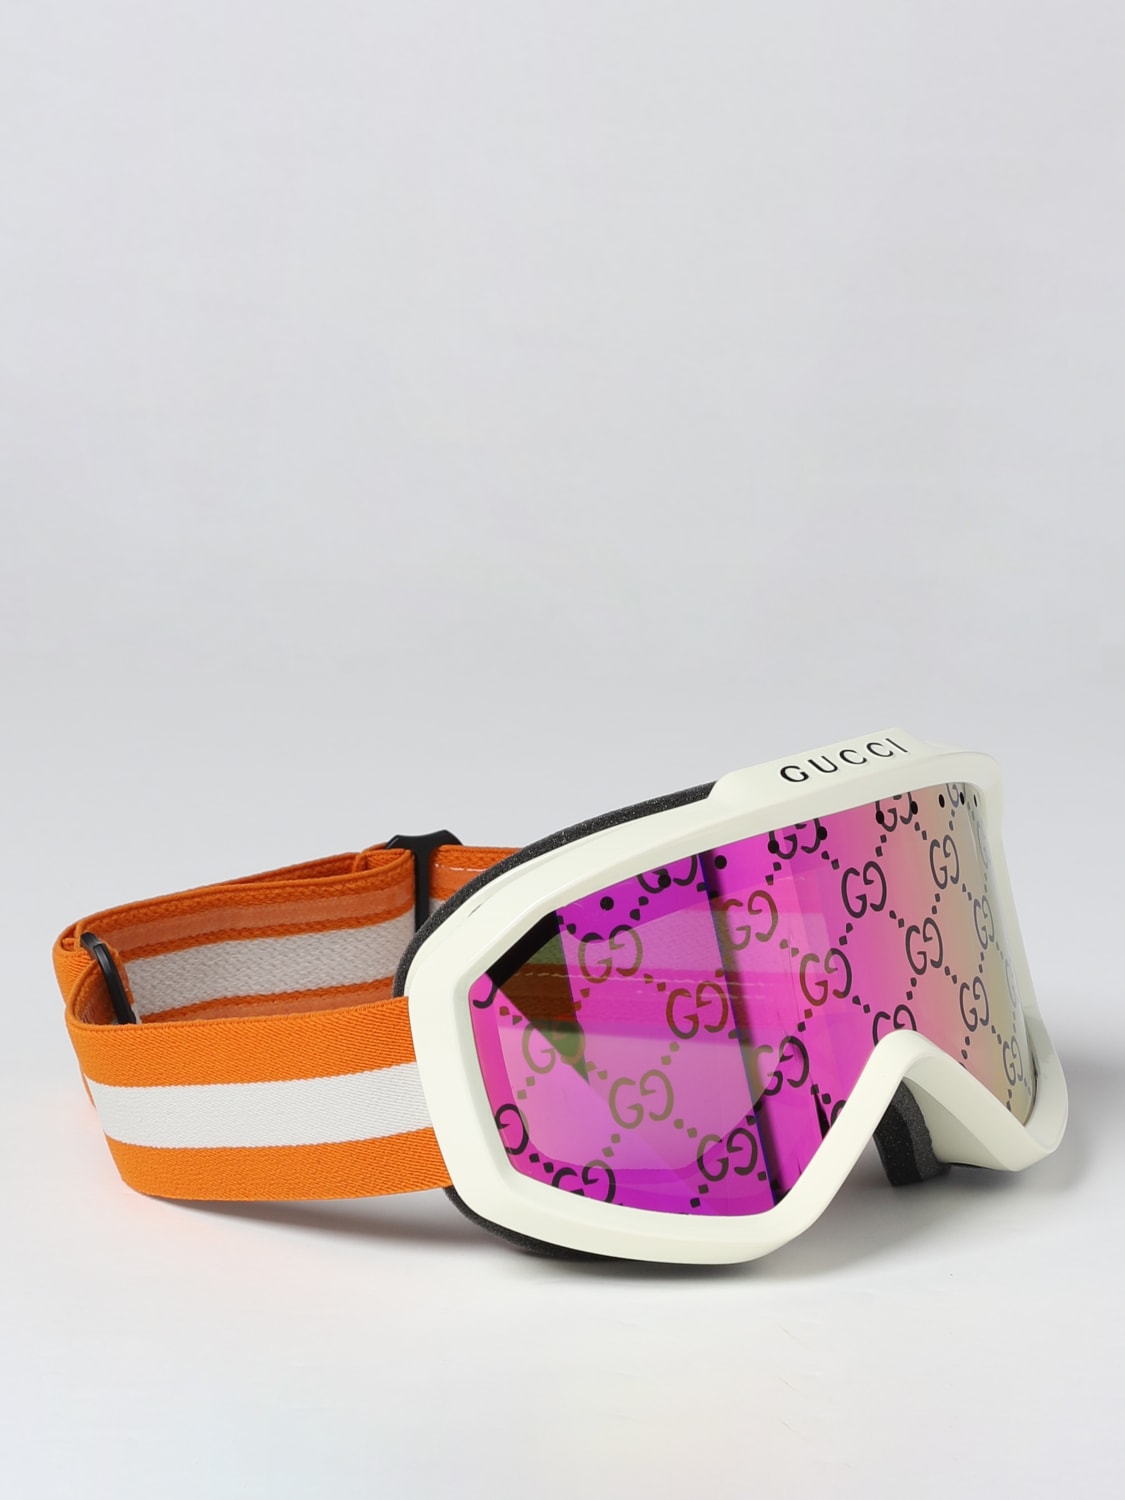 Gucci Logo Ski goggles in Gray for Men